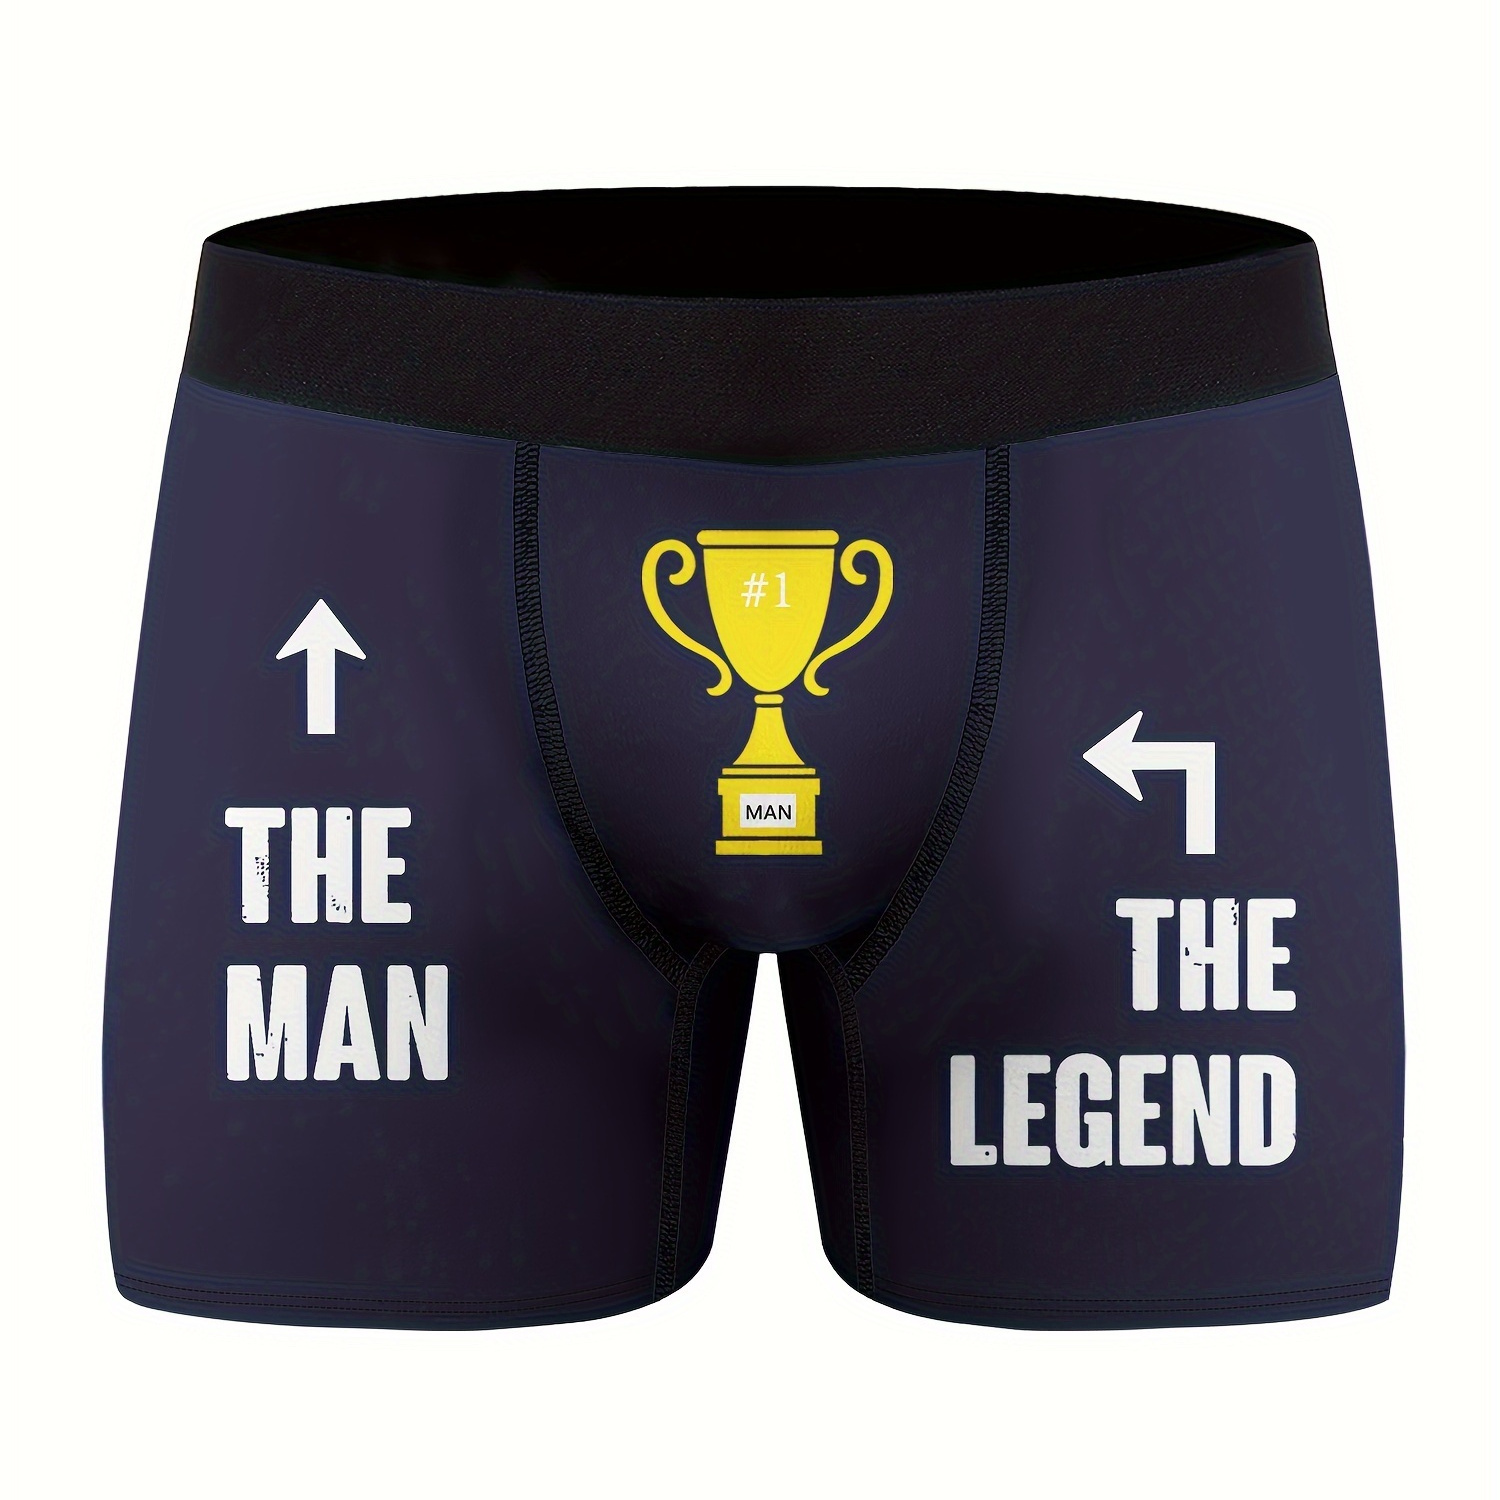 

Stylish Saying 'the Man The Legend' Digital Print Men's Fashion Novelty Underwear, Breathable Comfy High Stretch Boxer Briefs Shorts